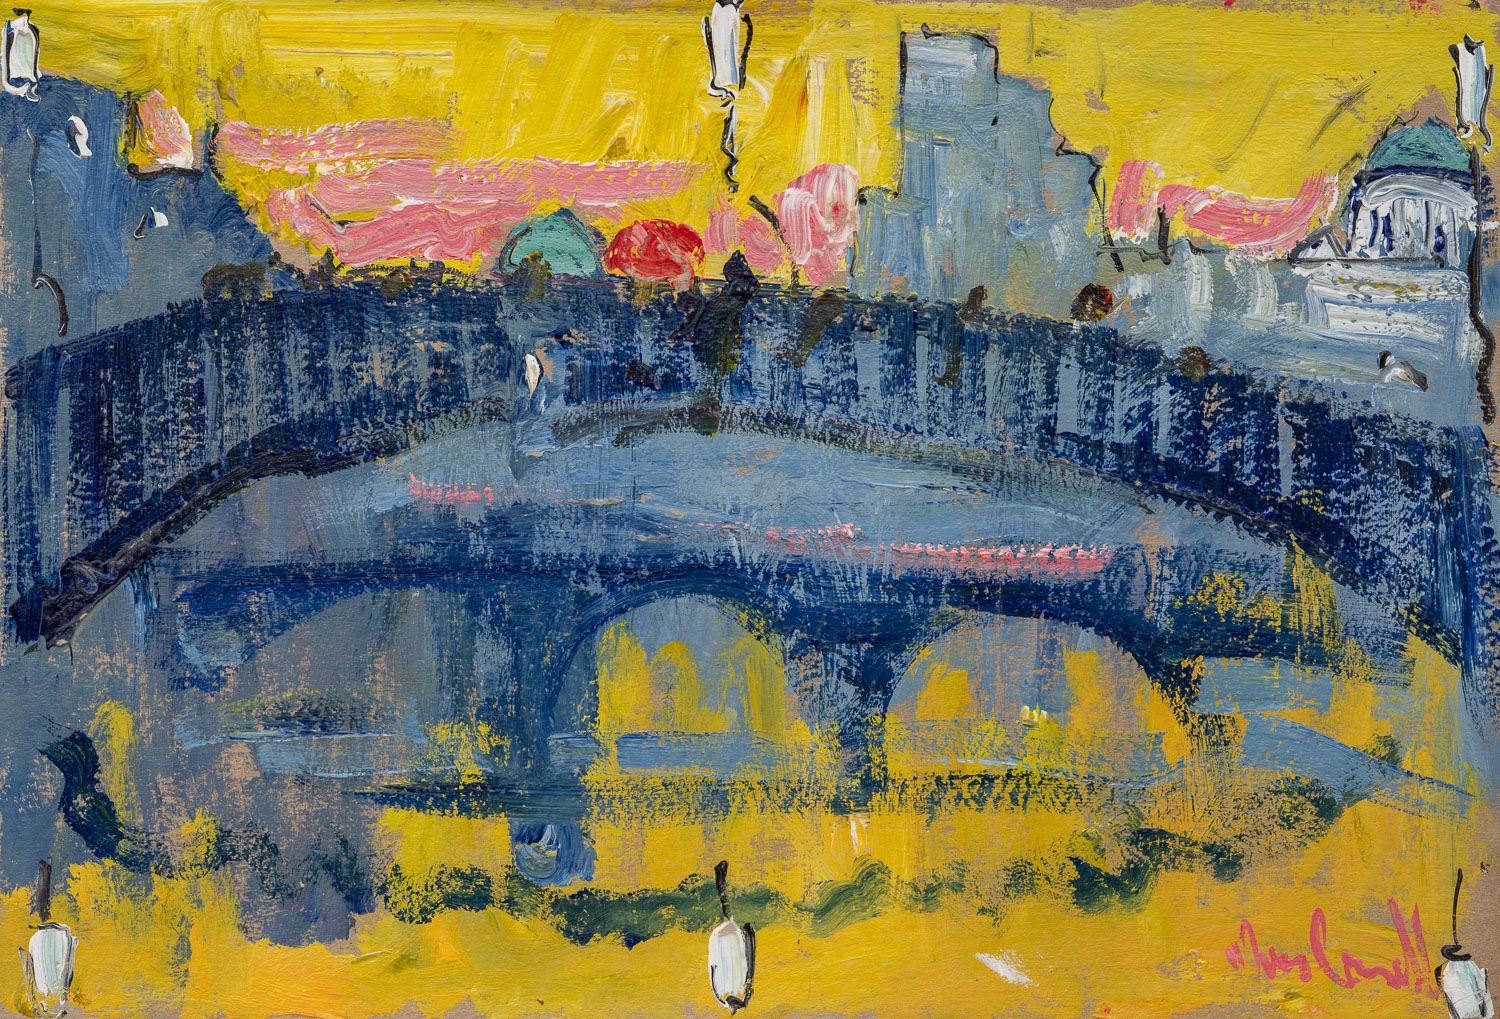 Sunset Ha'Penny Bridge by Marie Carroll